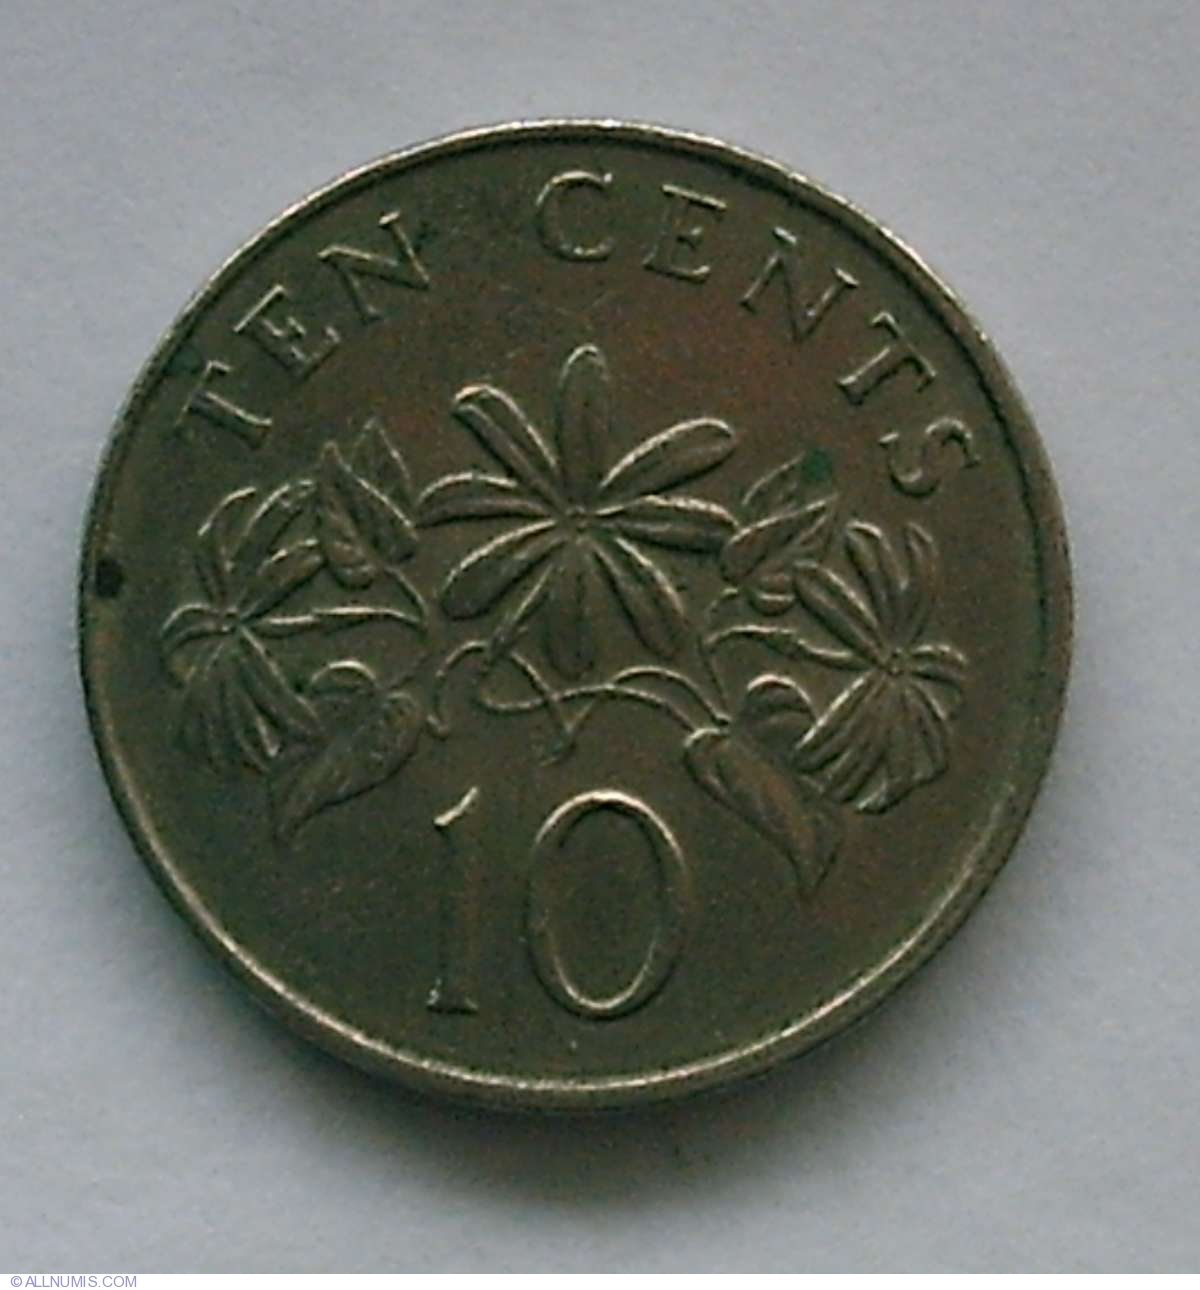 1986 Singapore Coin Keychain